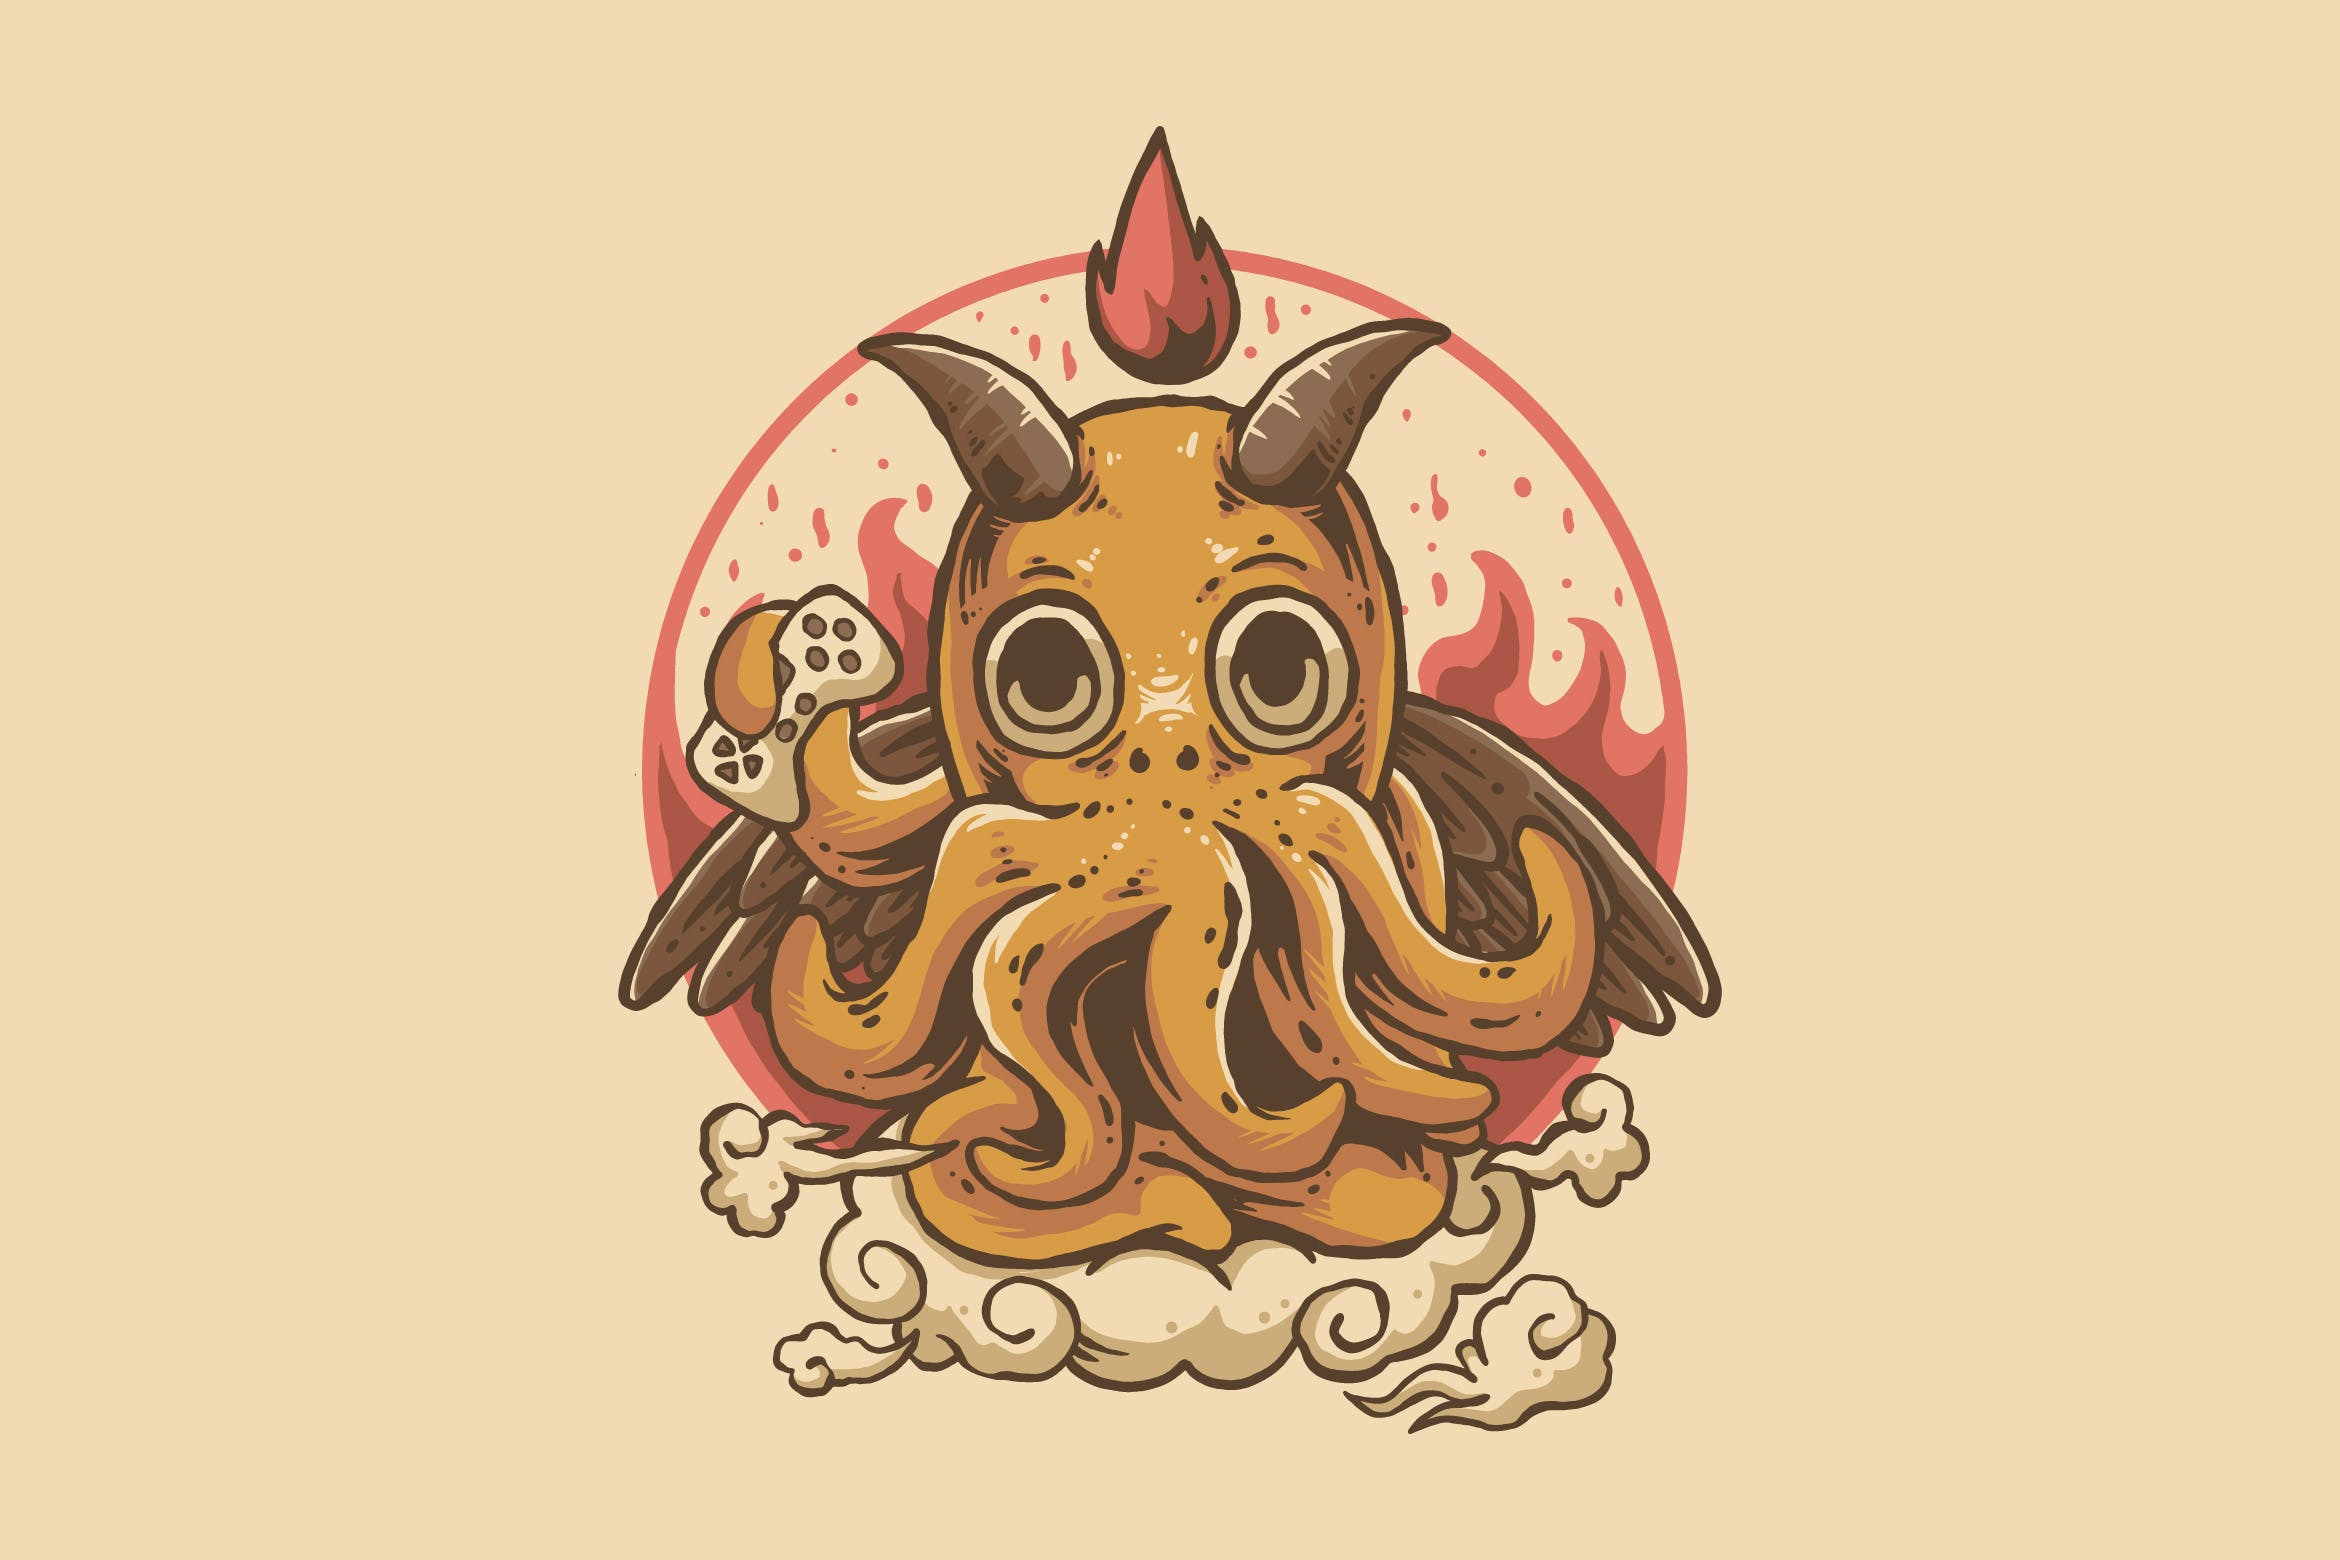 游戏鱿鱼Logo插画设计 game squid illustration design 图片素材 第1张